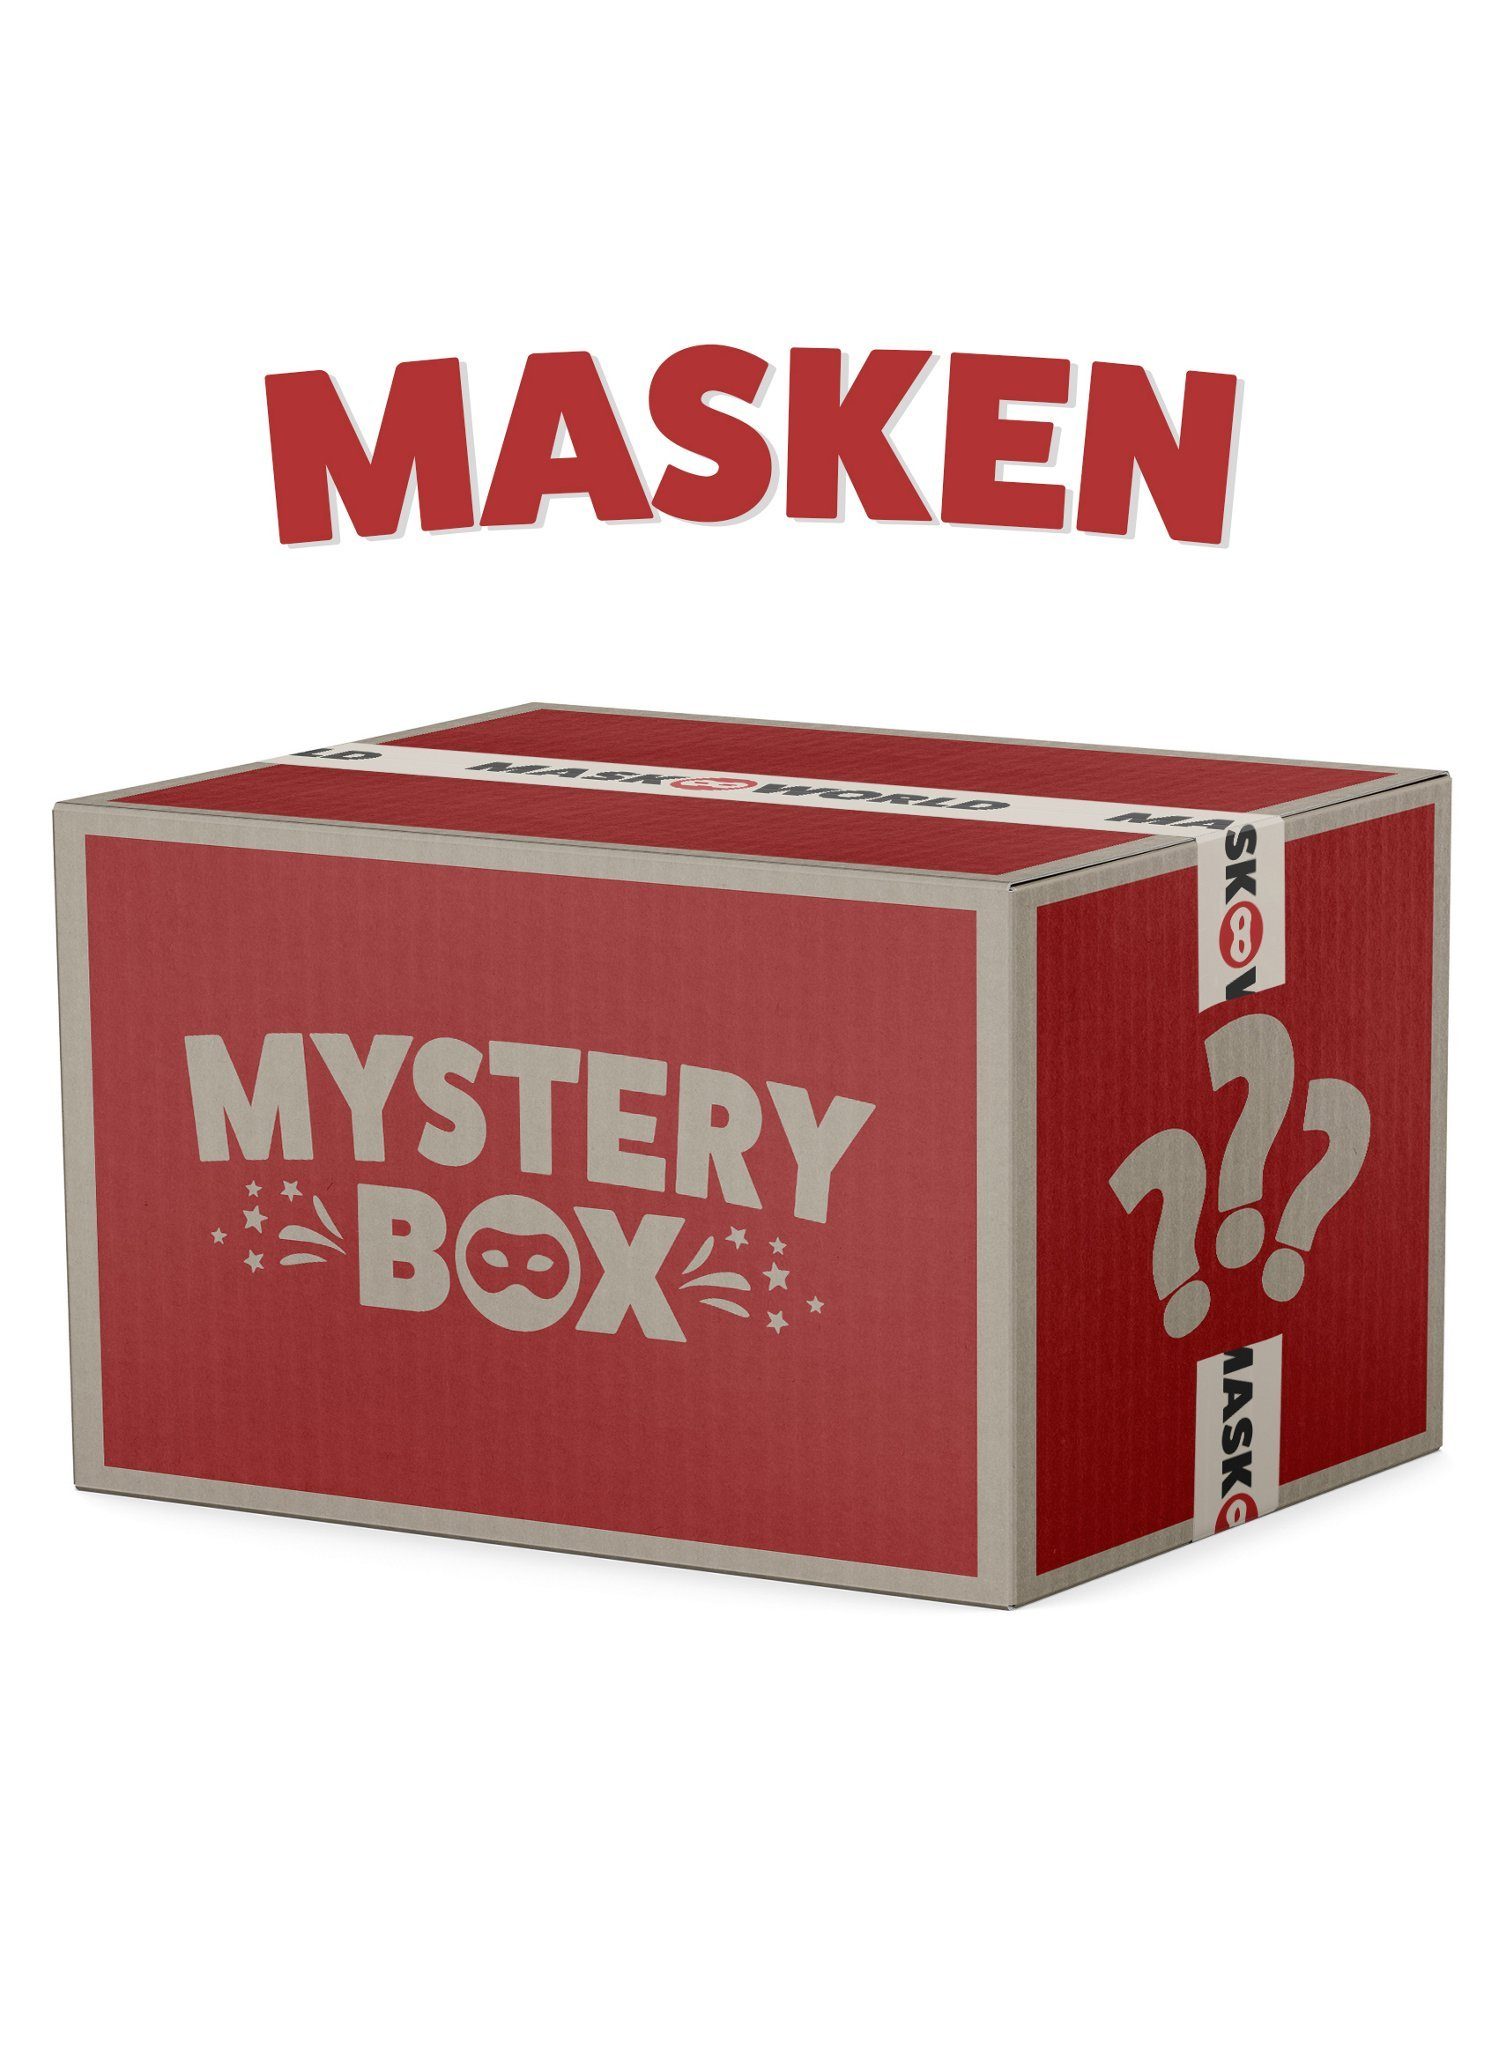 Metamorph Verkleidungsmaske Mystery Box - Masken, 50